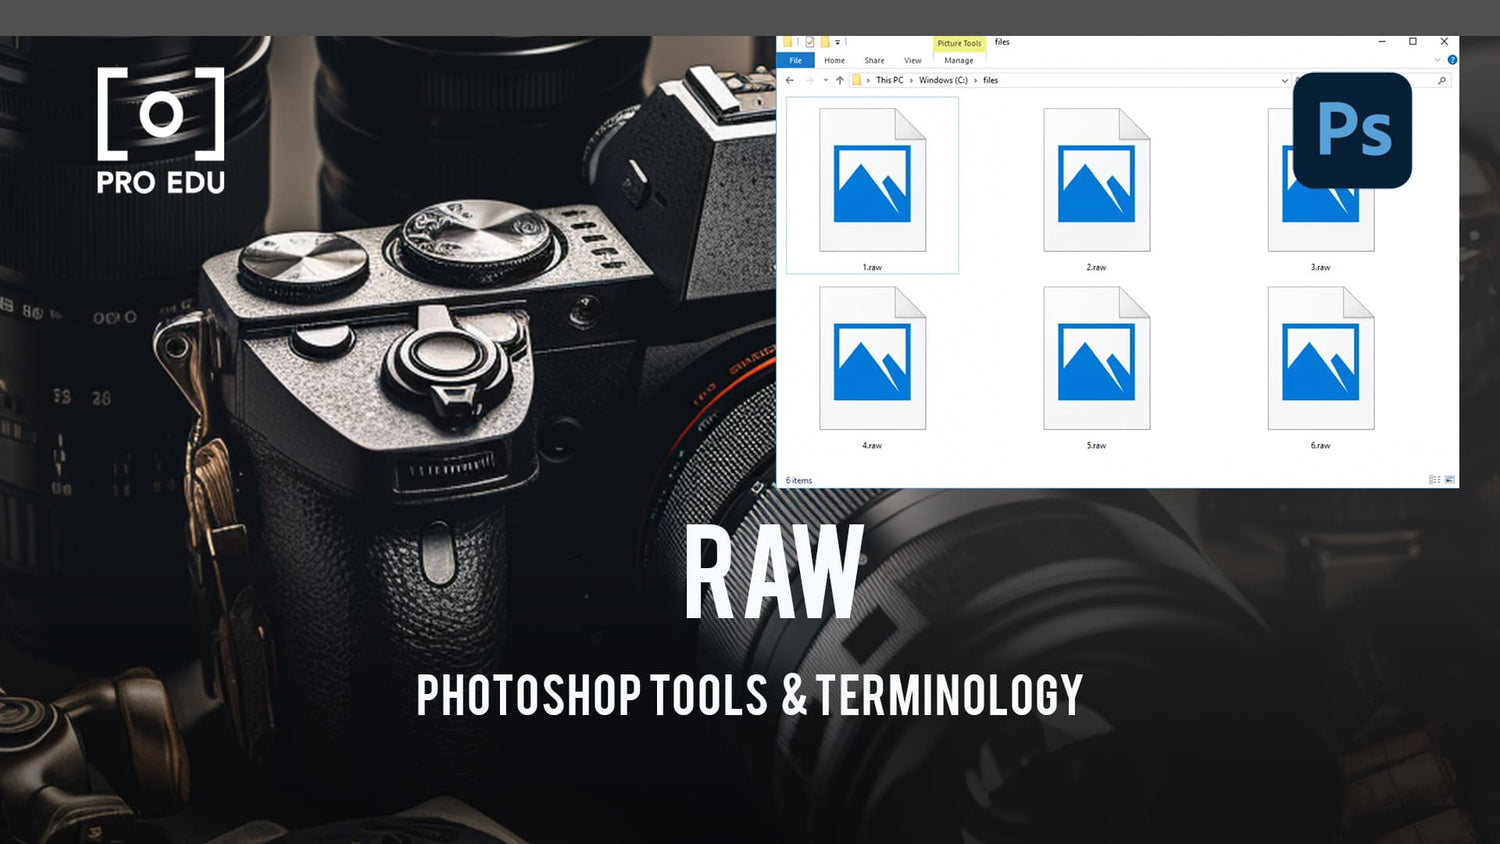 RAW Format in Photoshop Explained - PRO EDU Tutorial